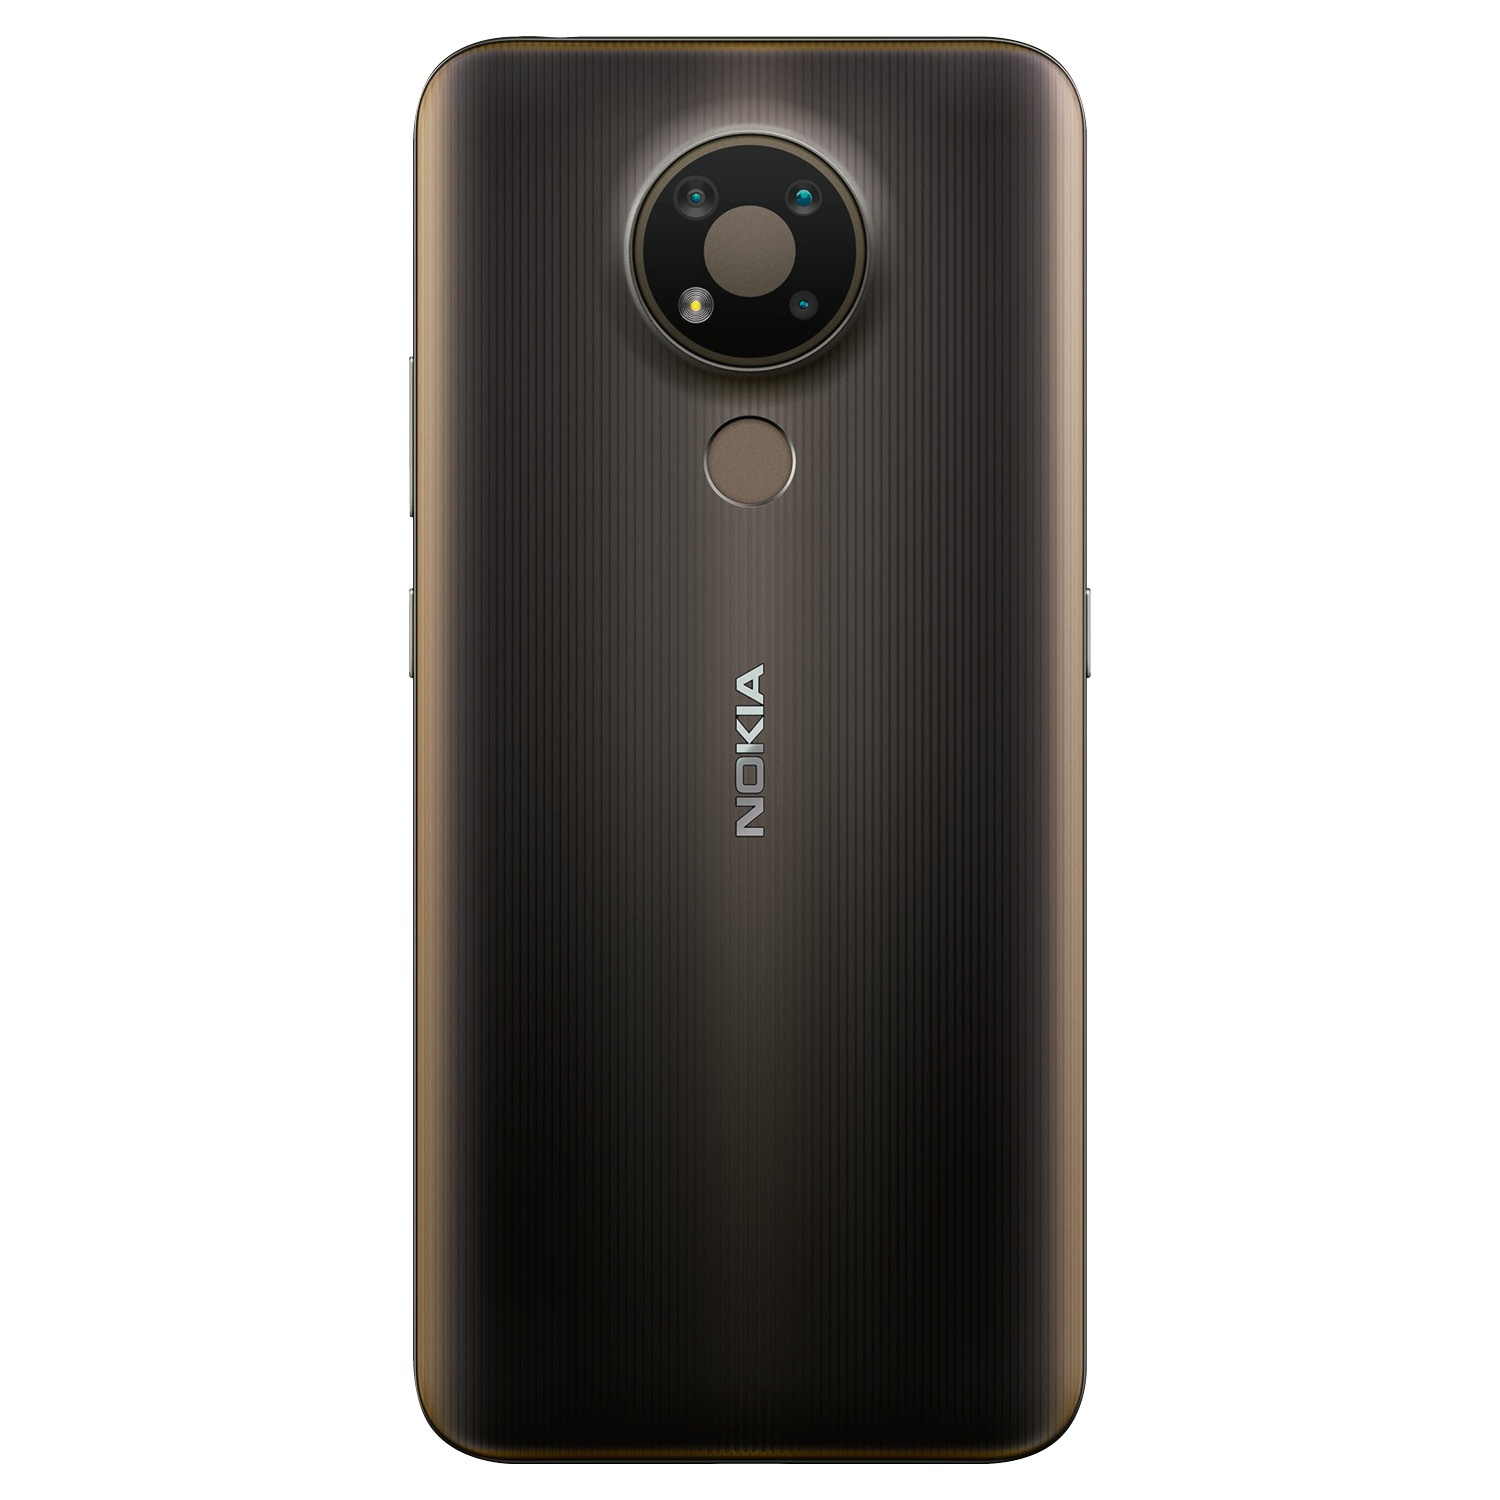 Nokia Smartphone Nokia 3.4